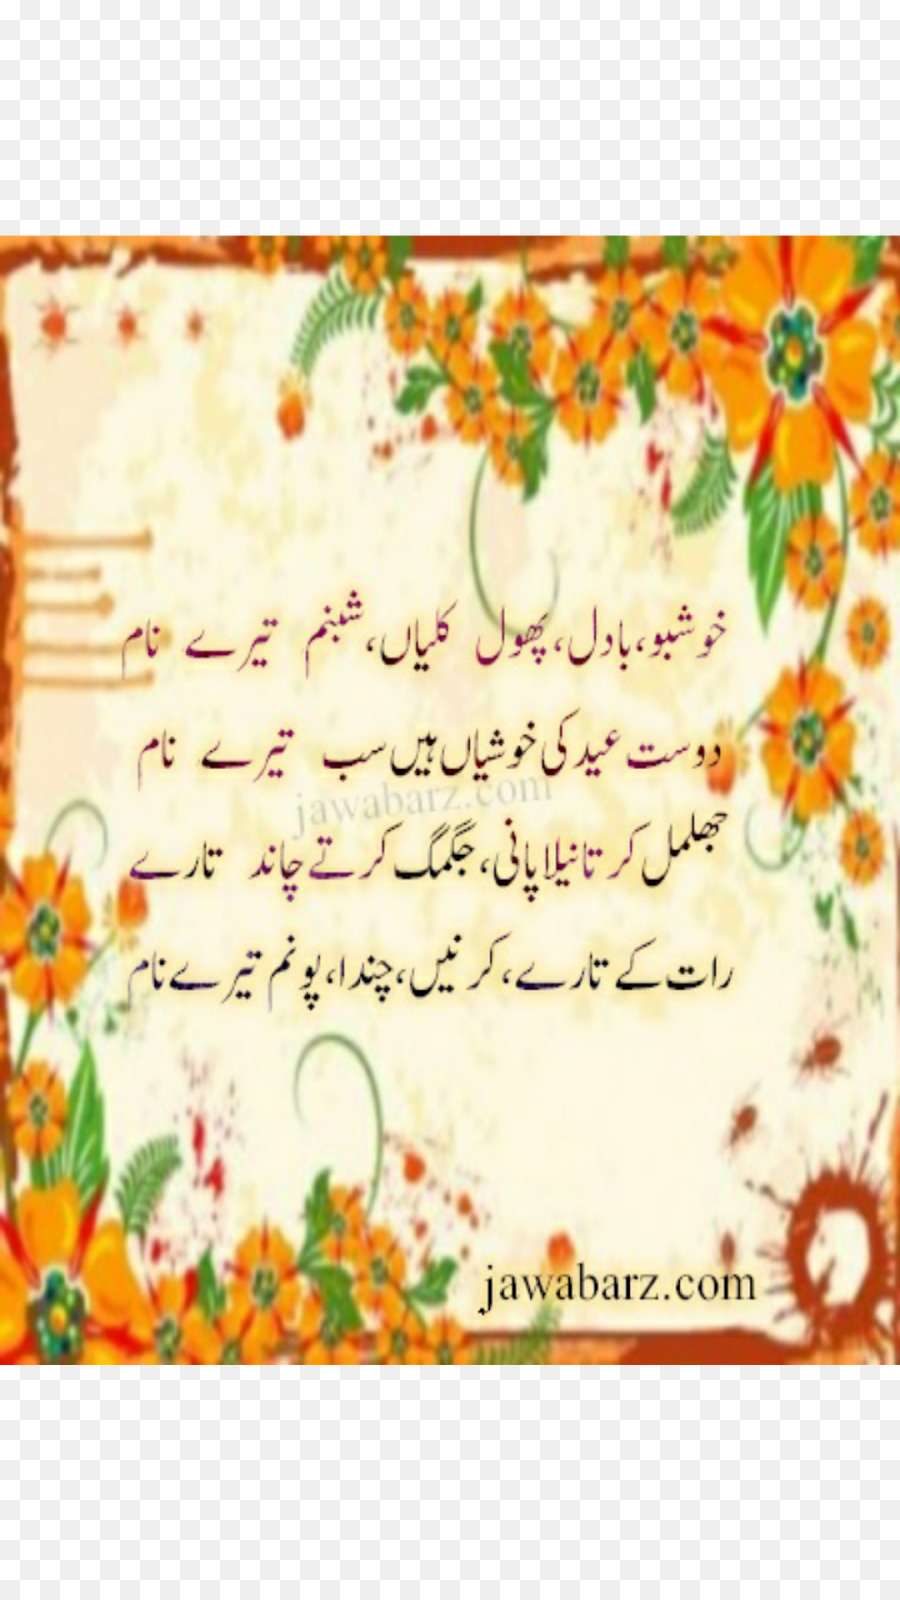 Image License - Good Morning Message In Urdu , HD Wallpaper & Backgrounds